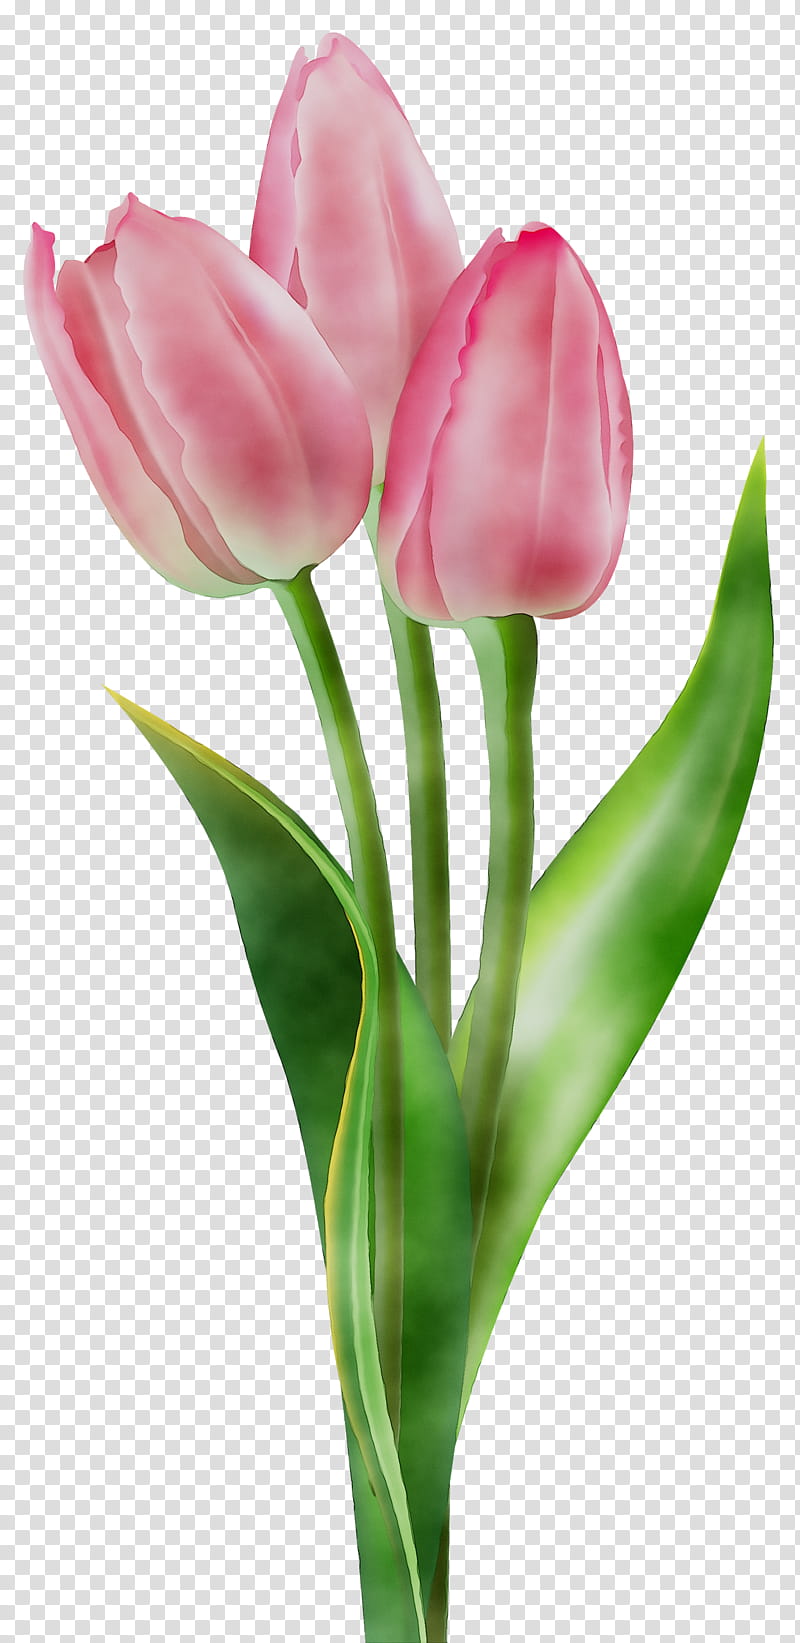 Lily Flower, Indira Gandhi Memorial Tulip Garden, Painting, Drawing, Petal, Plant, Tulipa Humilis, Pink transparent background PNG clipart